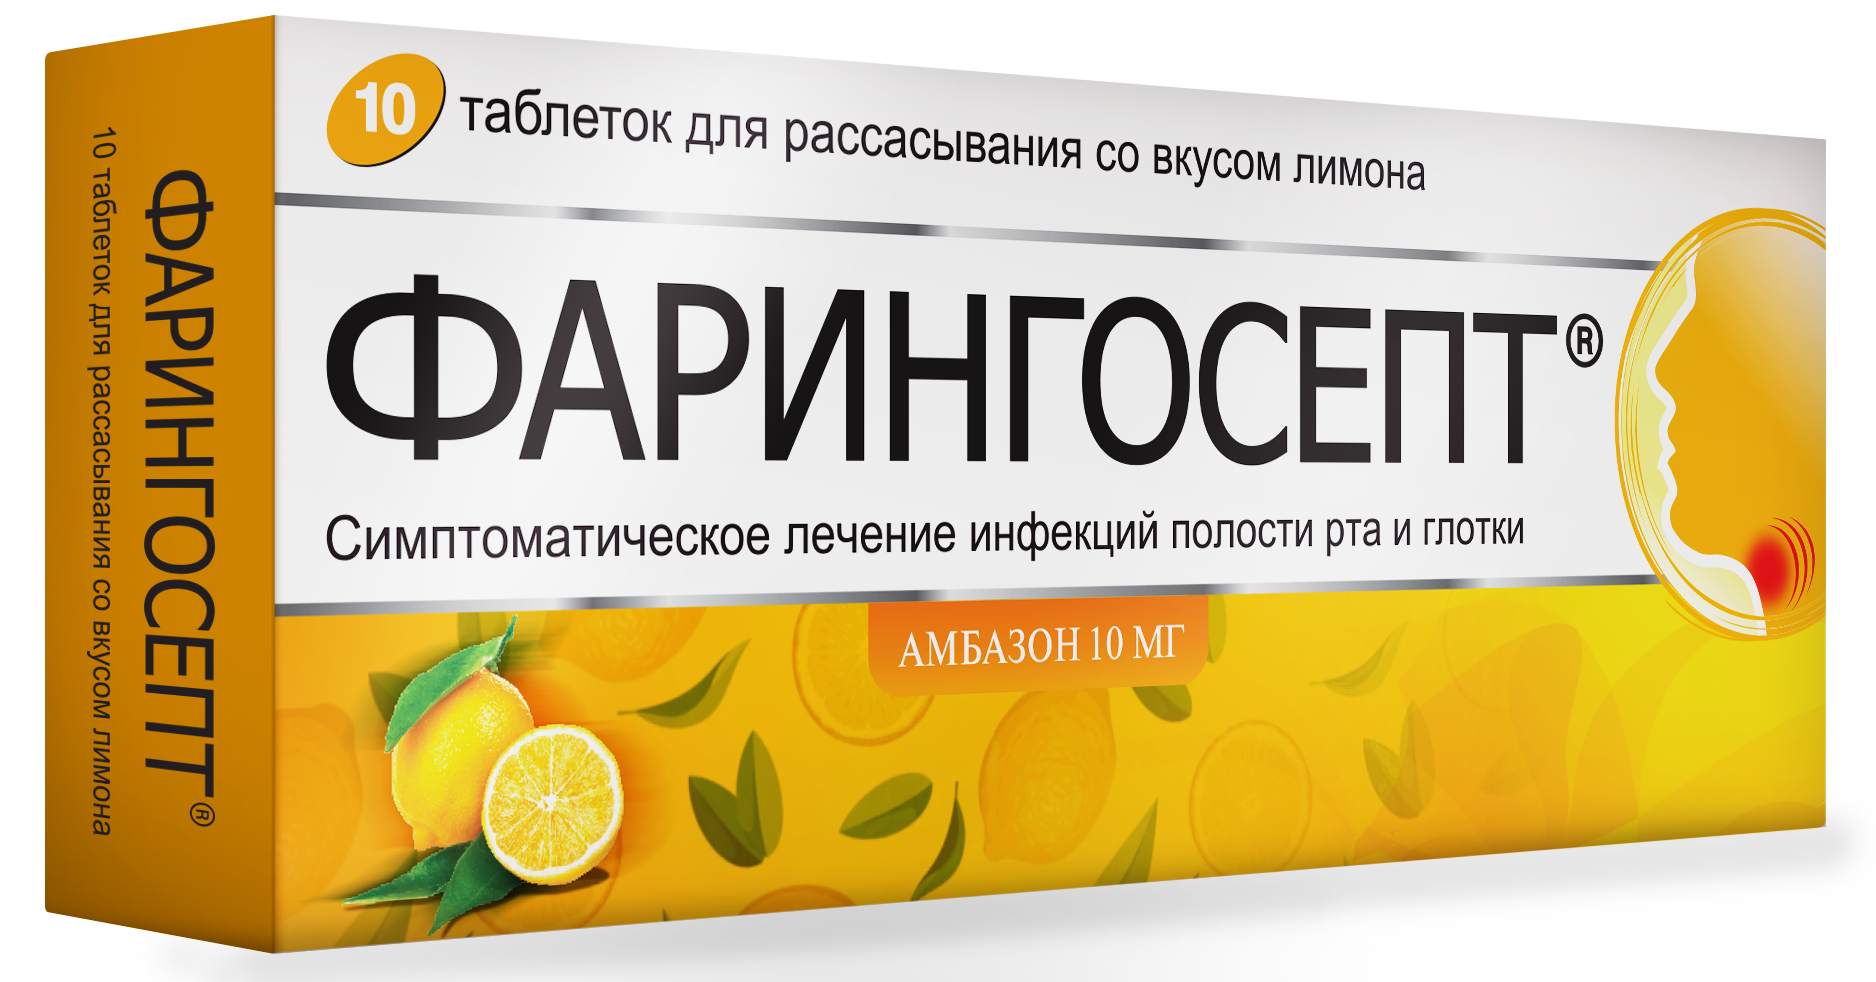 Фарингосепт, таблетки для рассасывания (лимон) 10 мг, 10 шт.